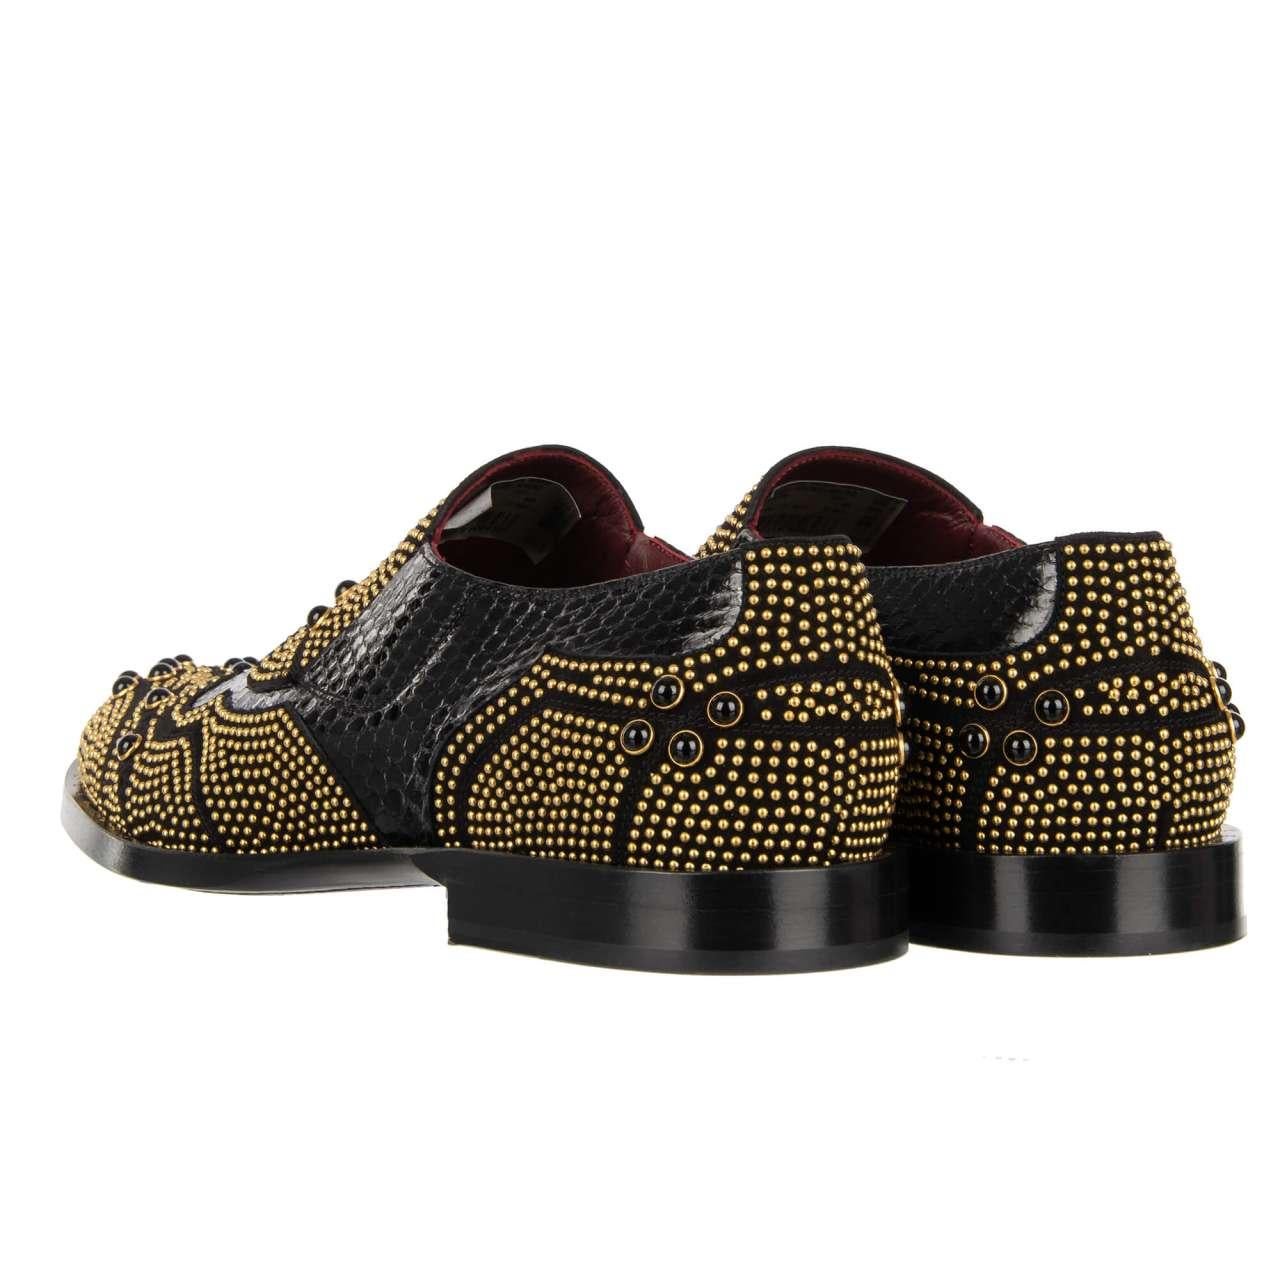 Dolce & Gabbana Snake Studs Pearl Shoes Loafer NAPLES Black Gold 44 UK 10 US 11 In Excellent Condition For Sale In Erkrath, DE